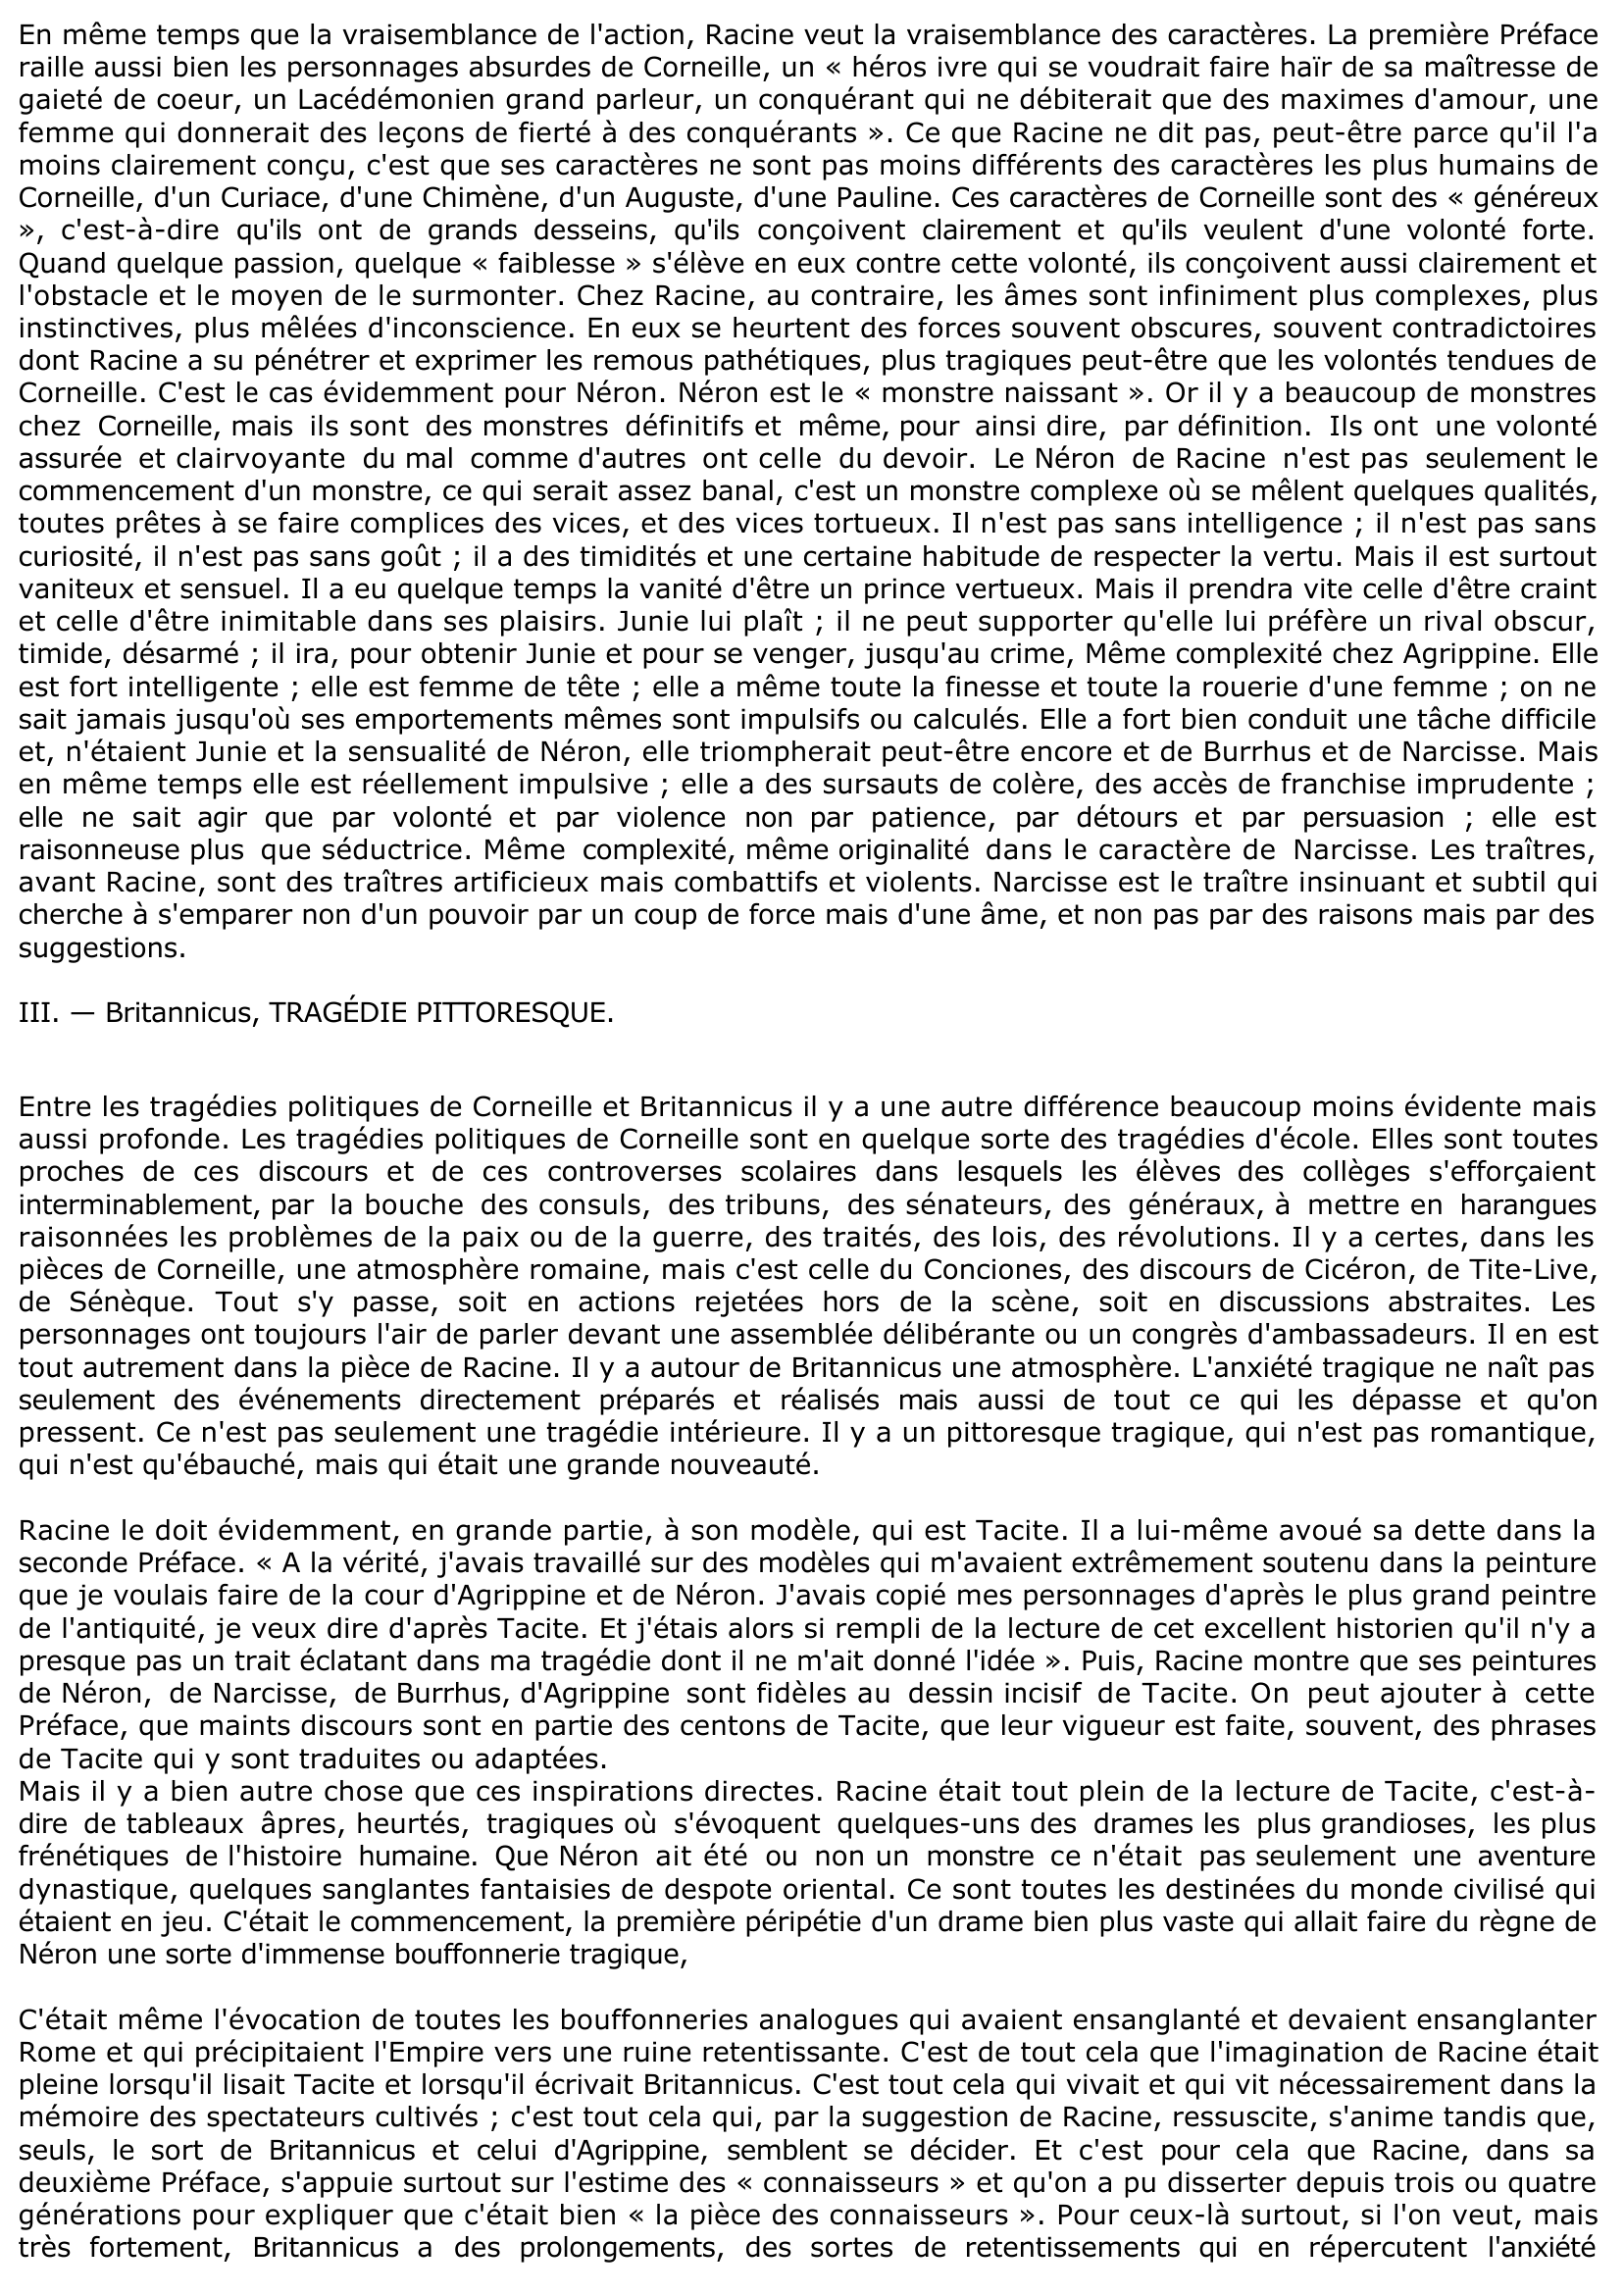 Prévisualisation du document ANALYSE DE BRITANNICUS DE RACINE